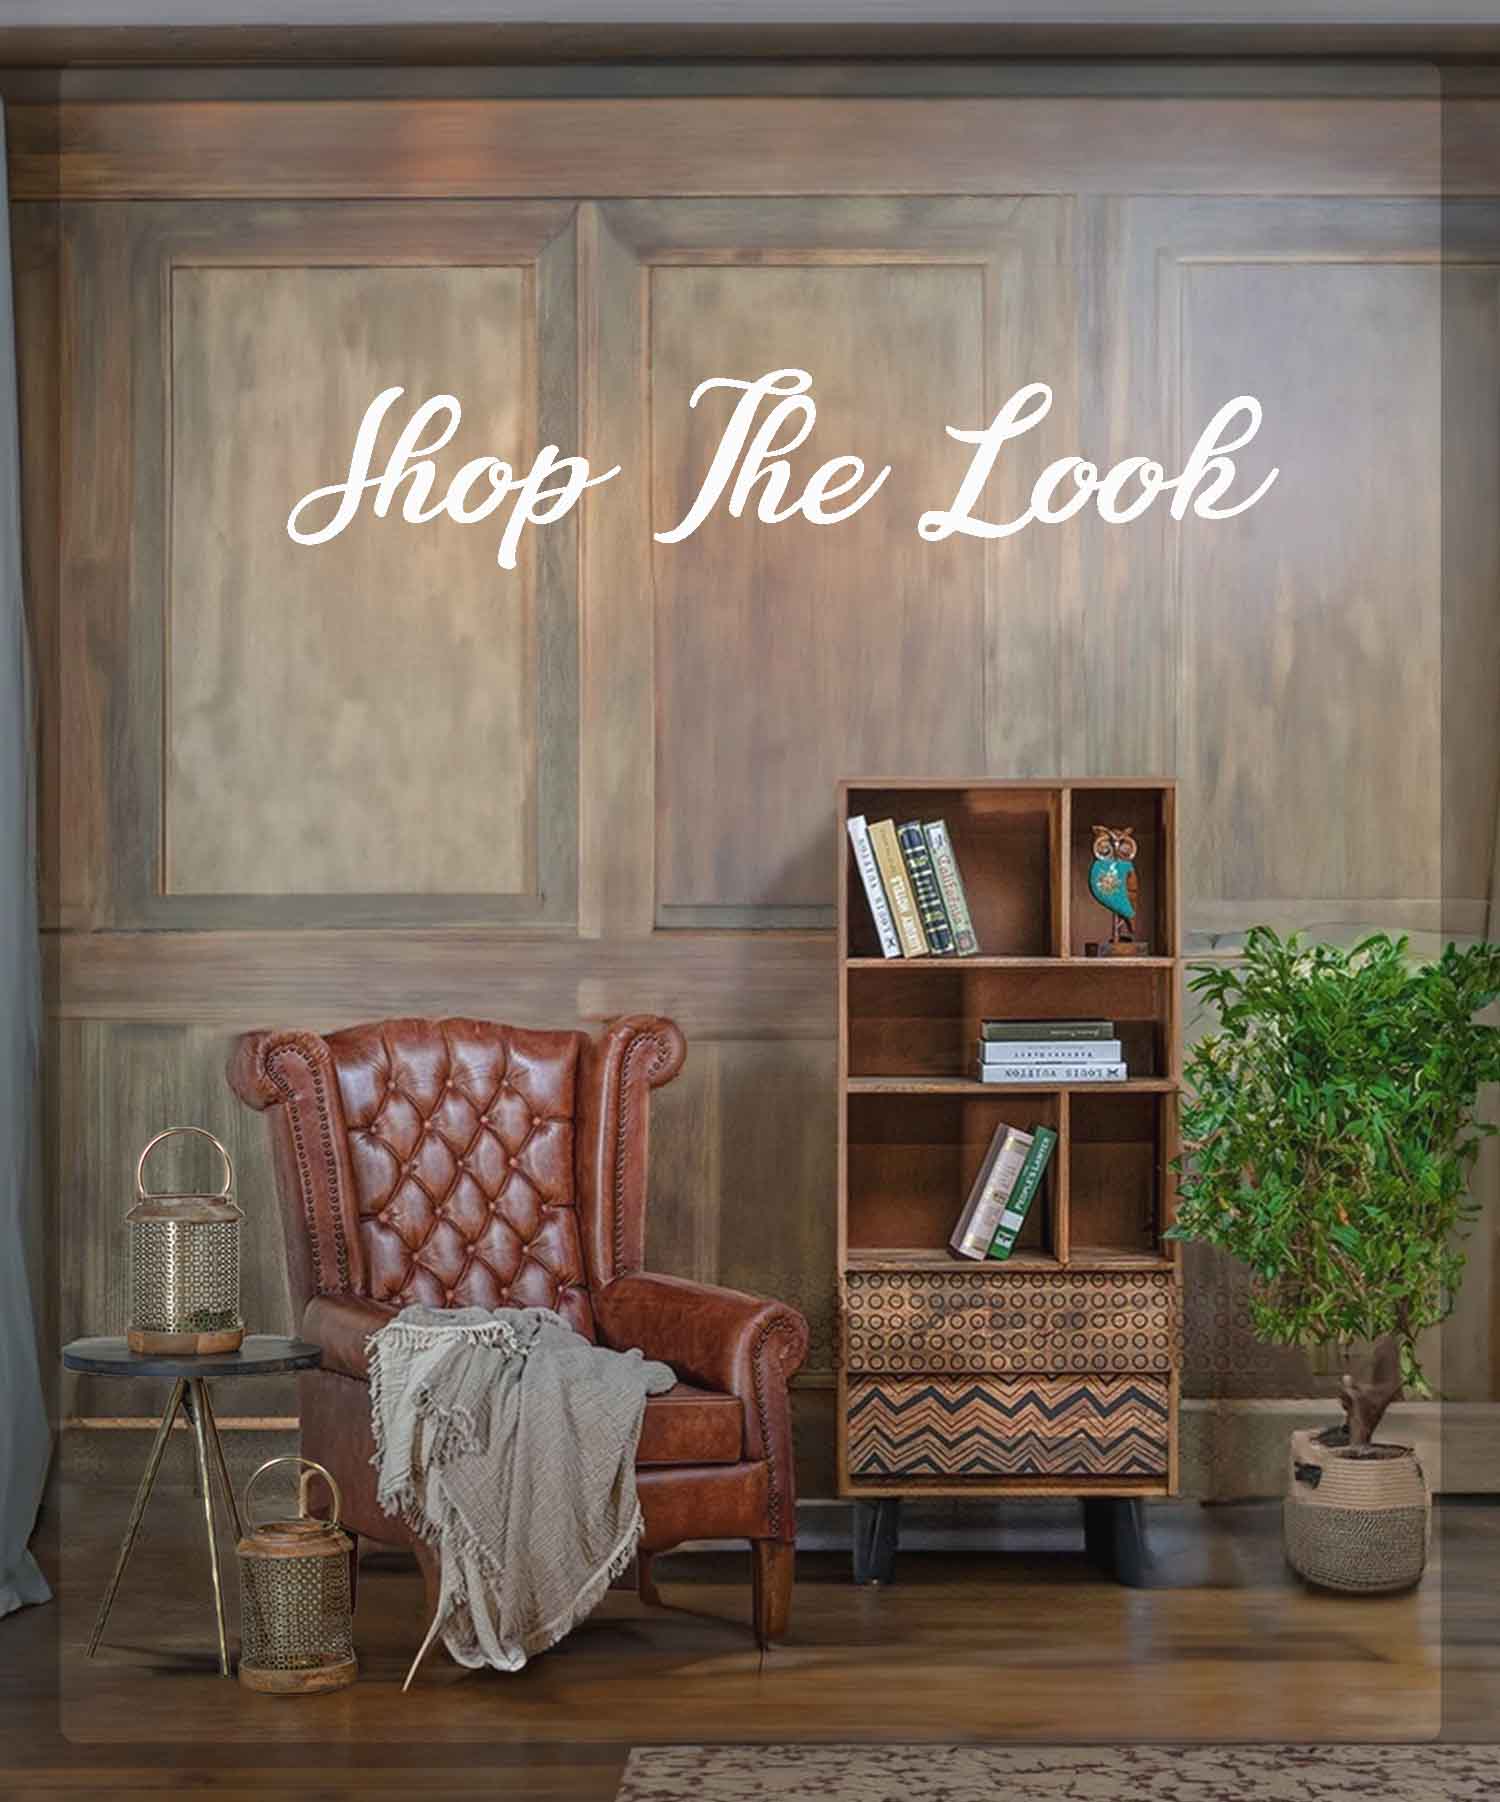 wing chair, carpet, indoor plants, jute bag, home decor, shop the look